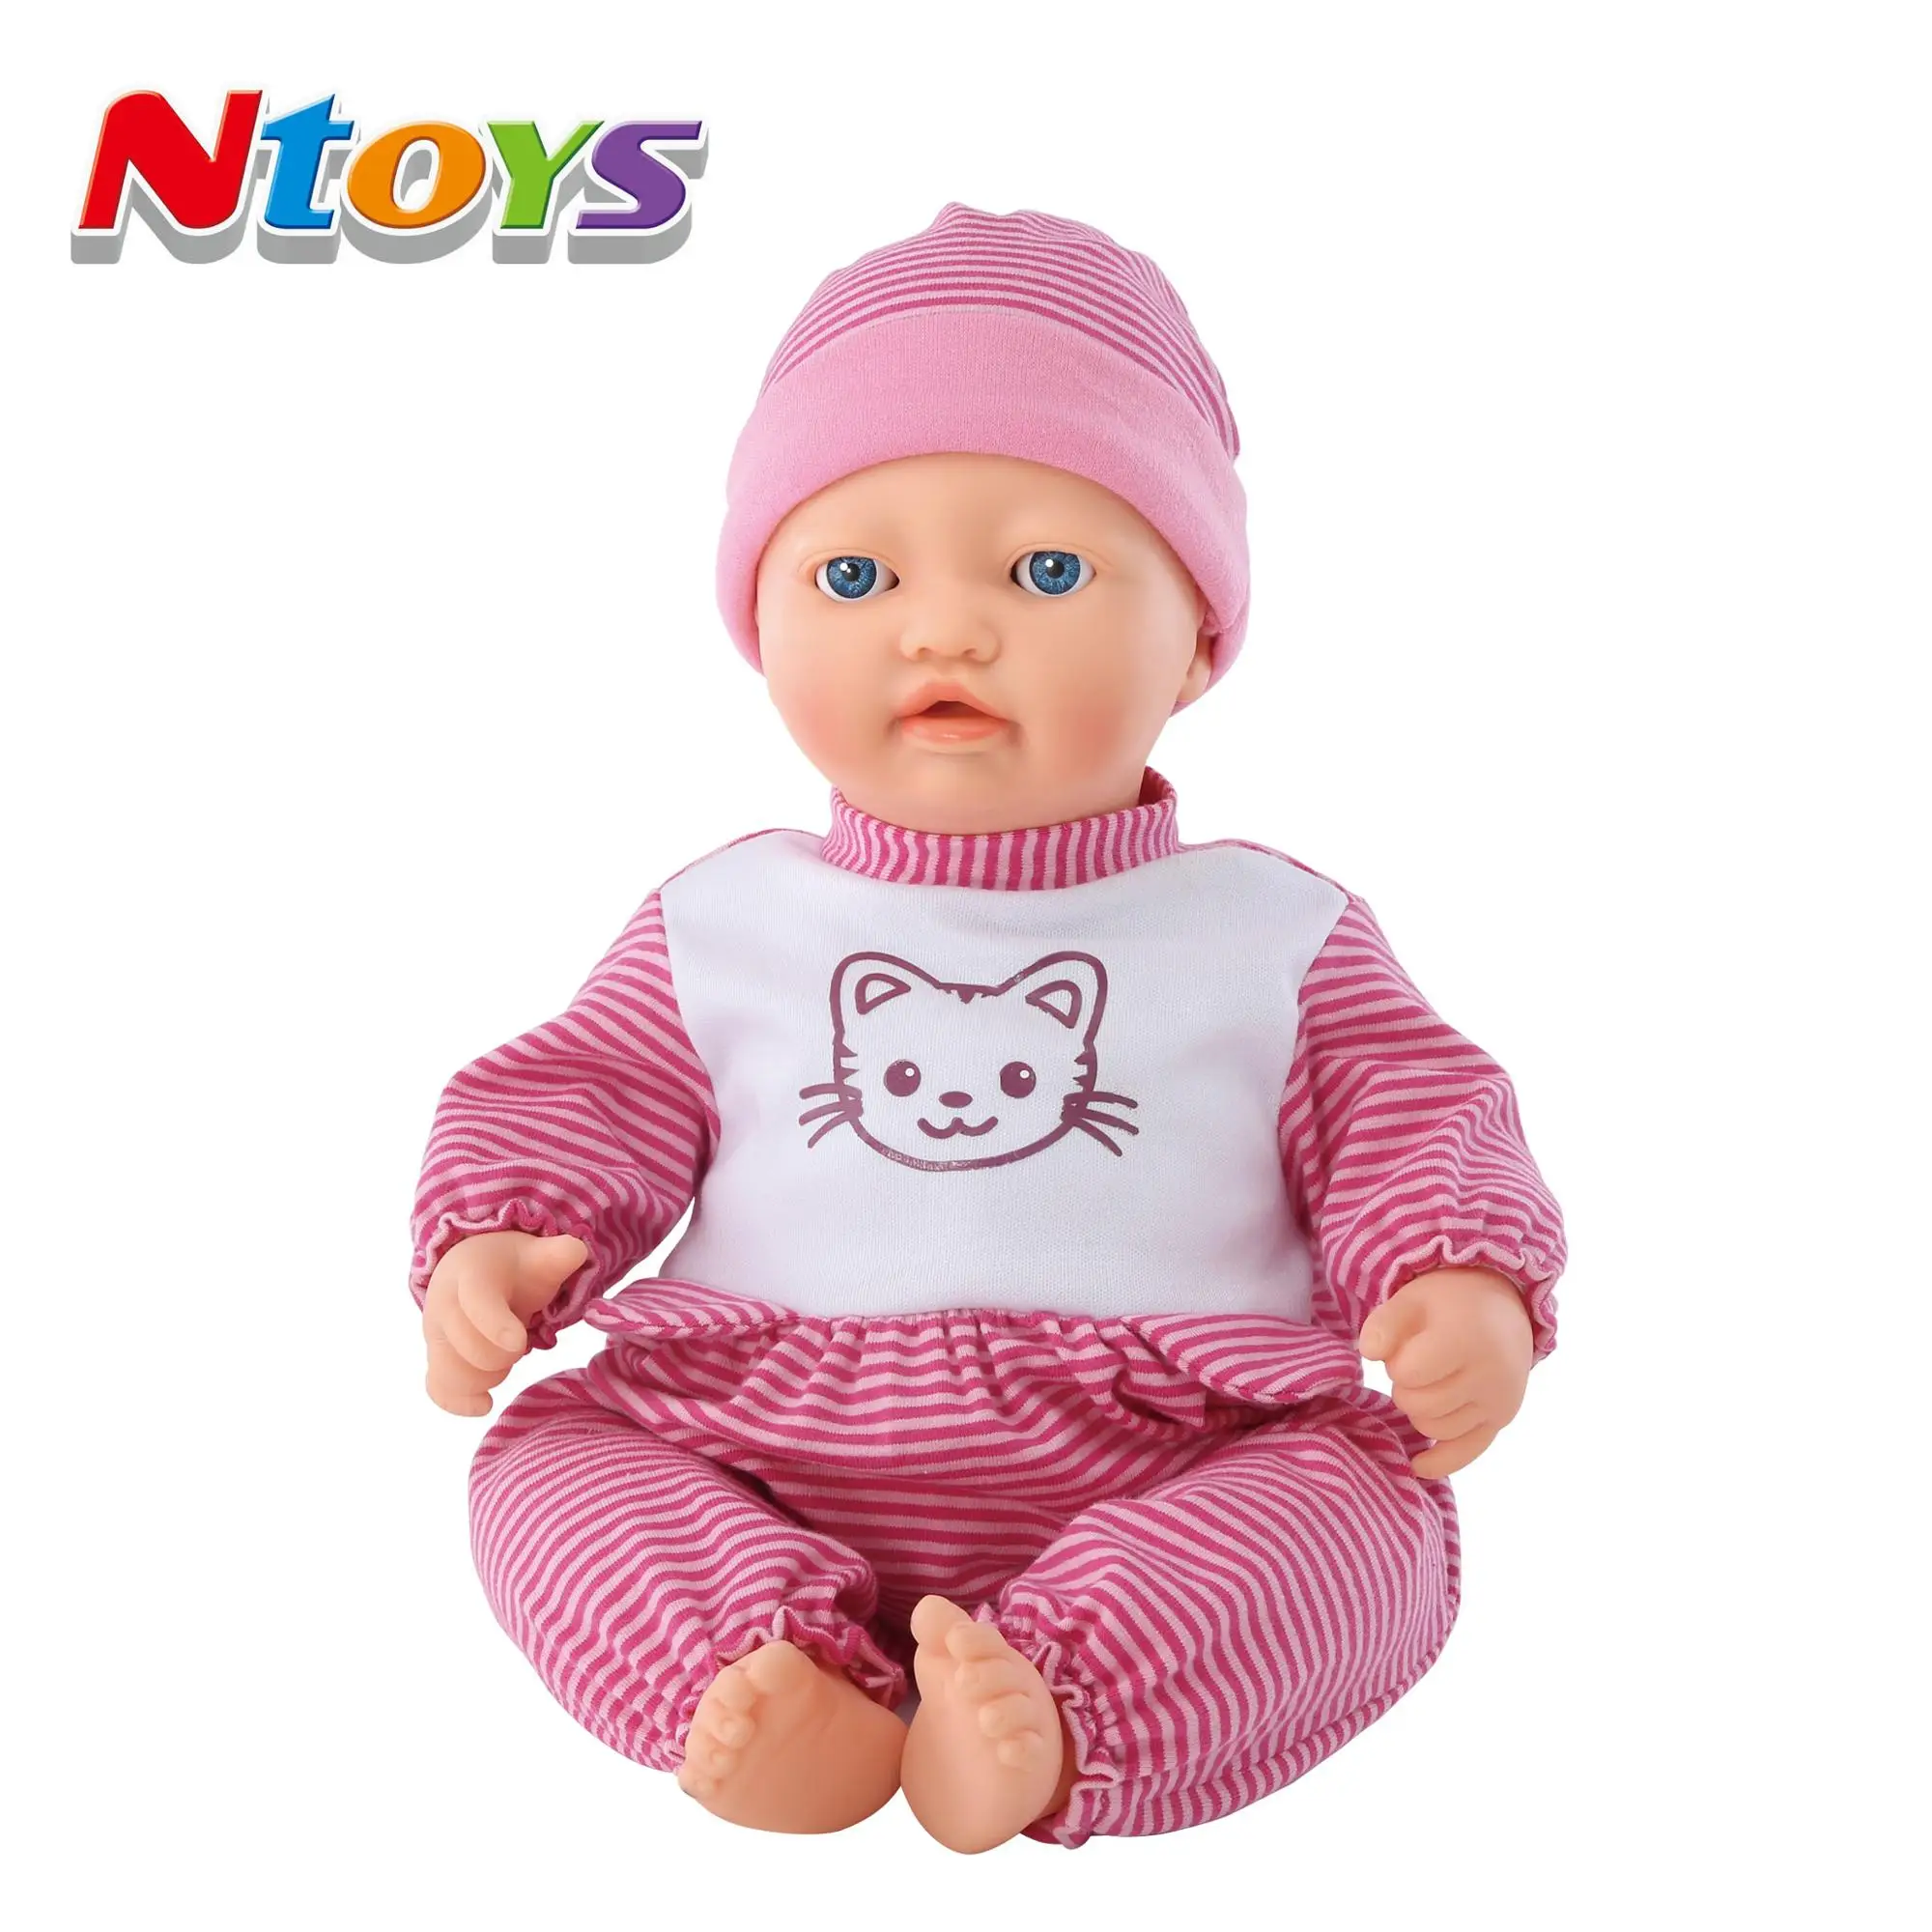 baby doll website